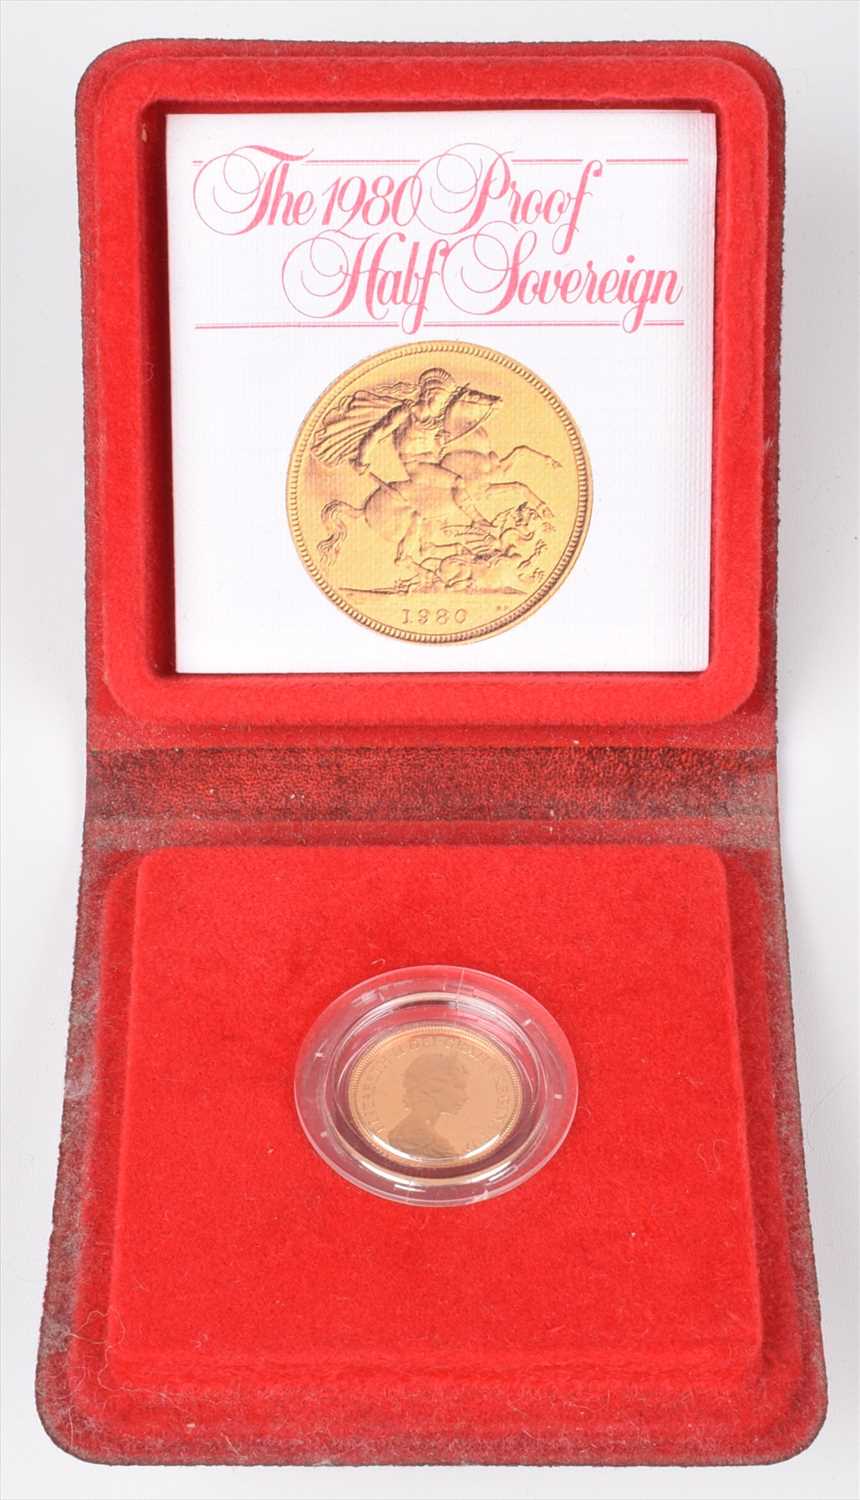 Lot 70 - 1980 Royal Mint, Proof Half-Sovereign.